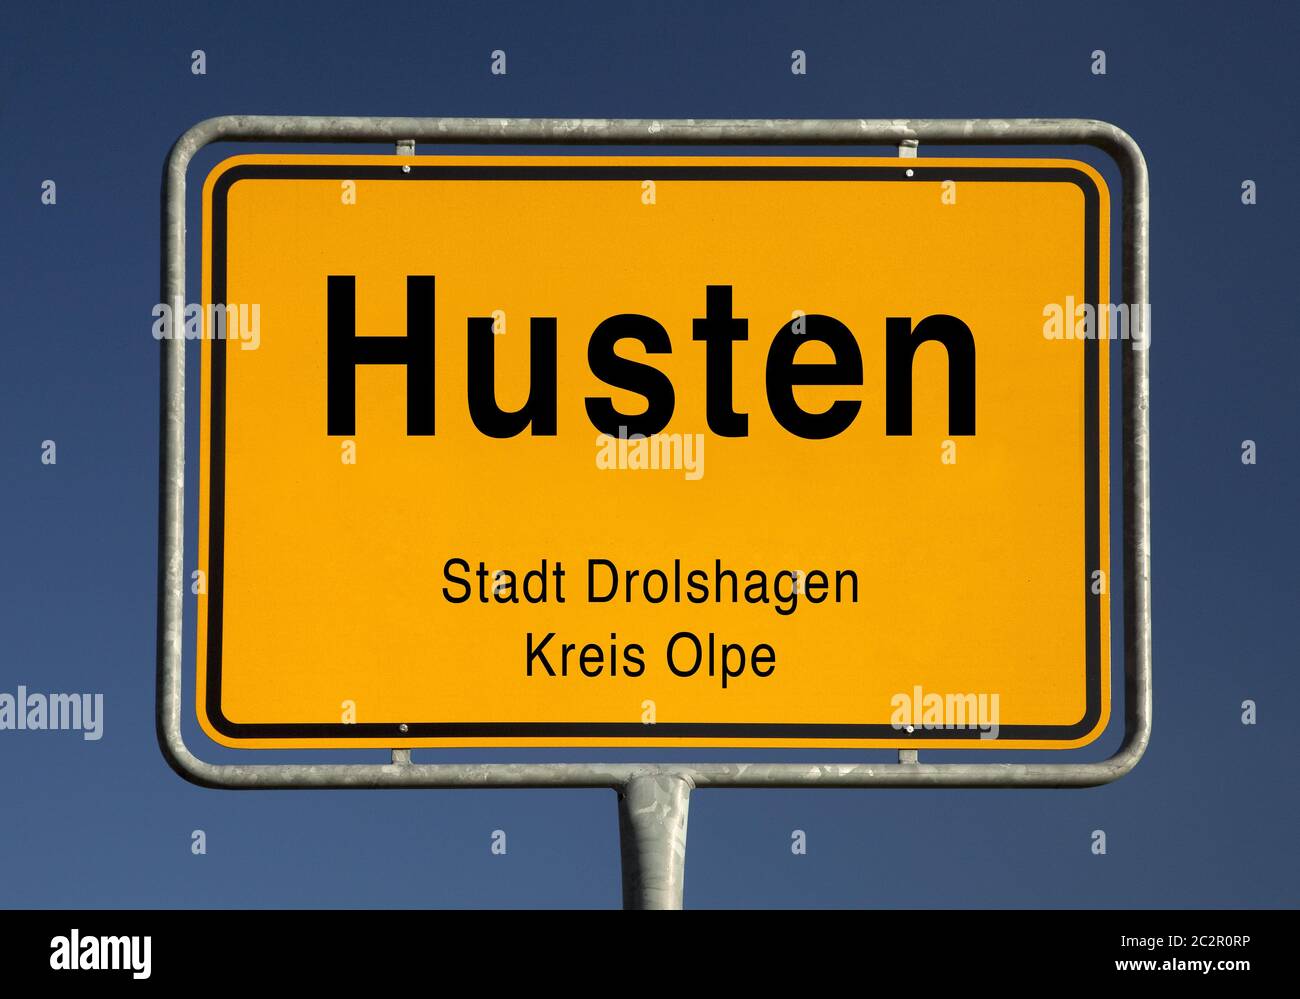 Entrance sign of Husten, town of Drolshagen, Olpe, North Rhine-Westphalia, Germany, Europe Stock Photo